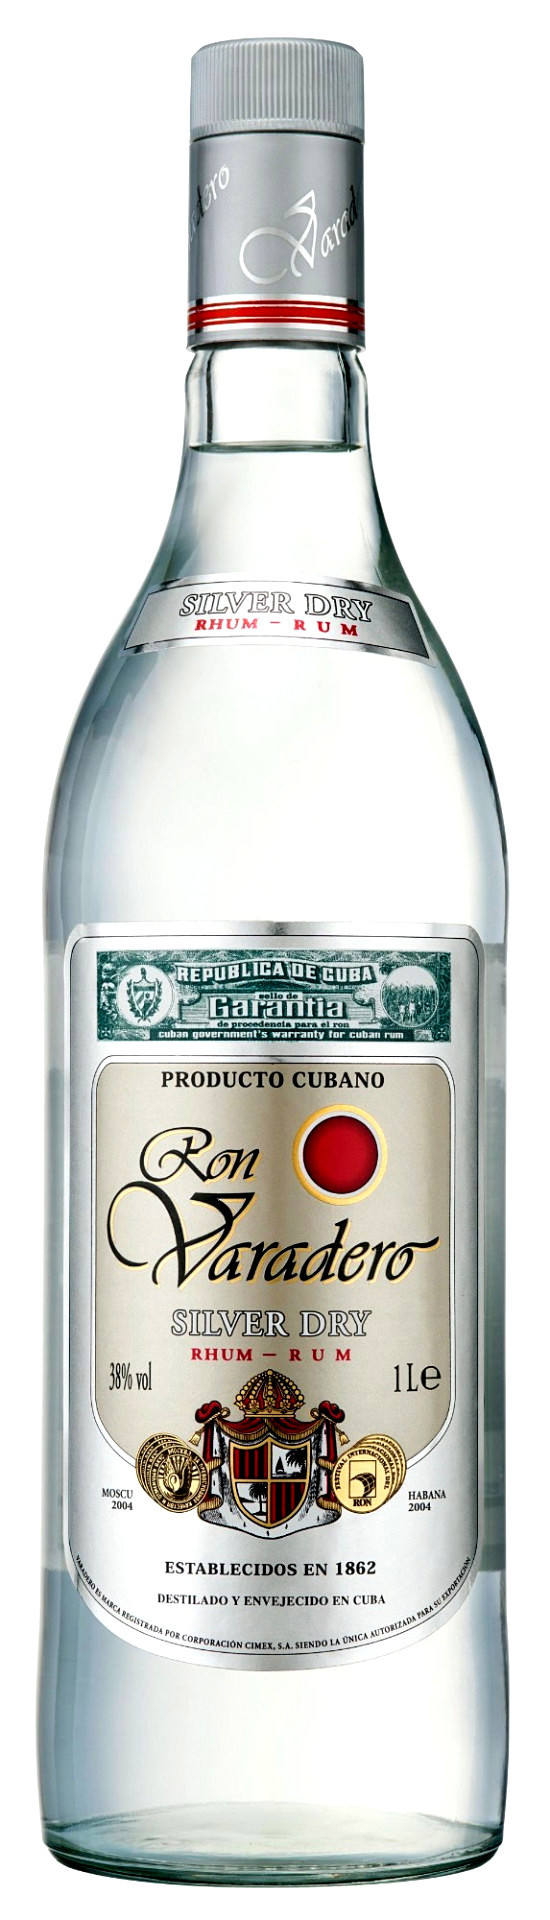 Varadero Silver Dry Rum 1l